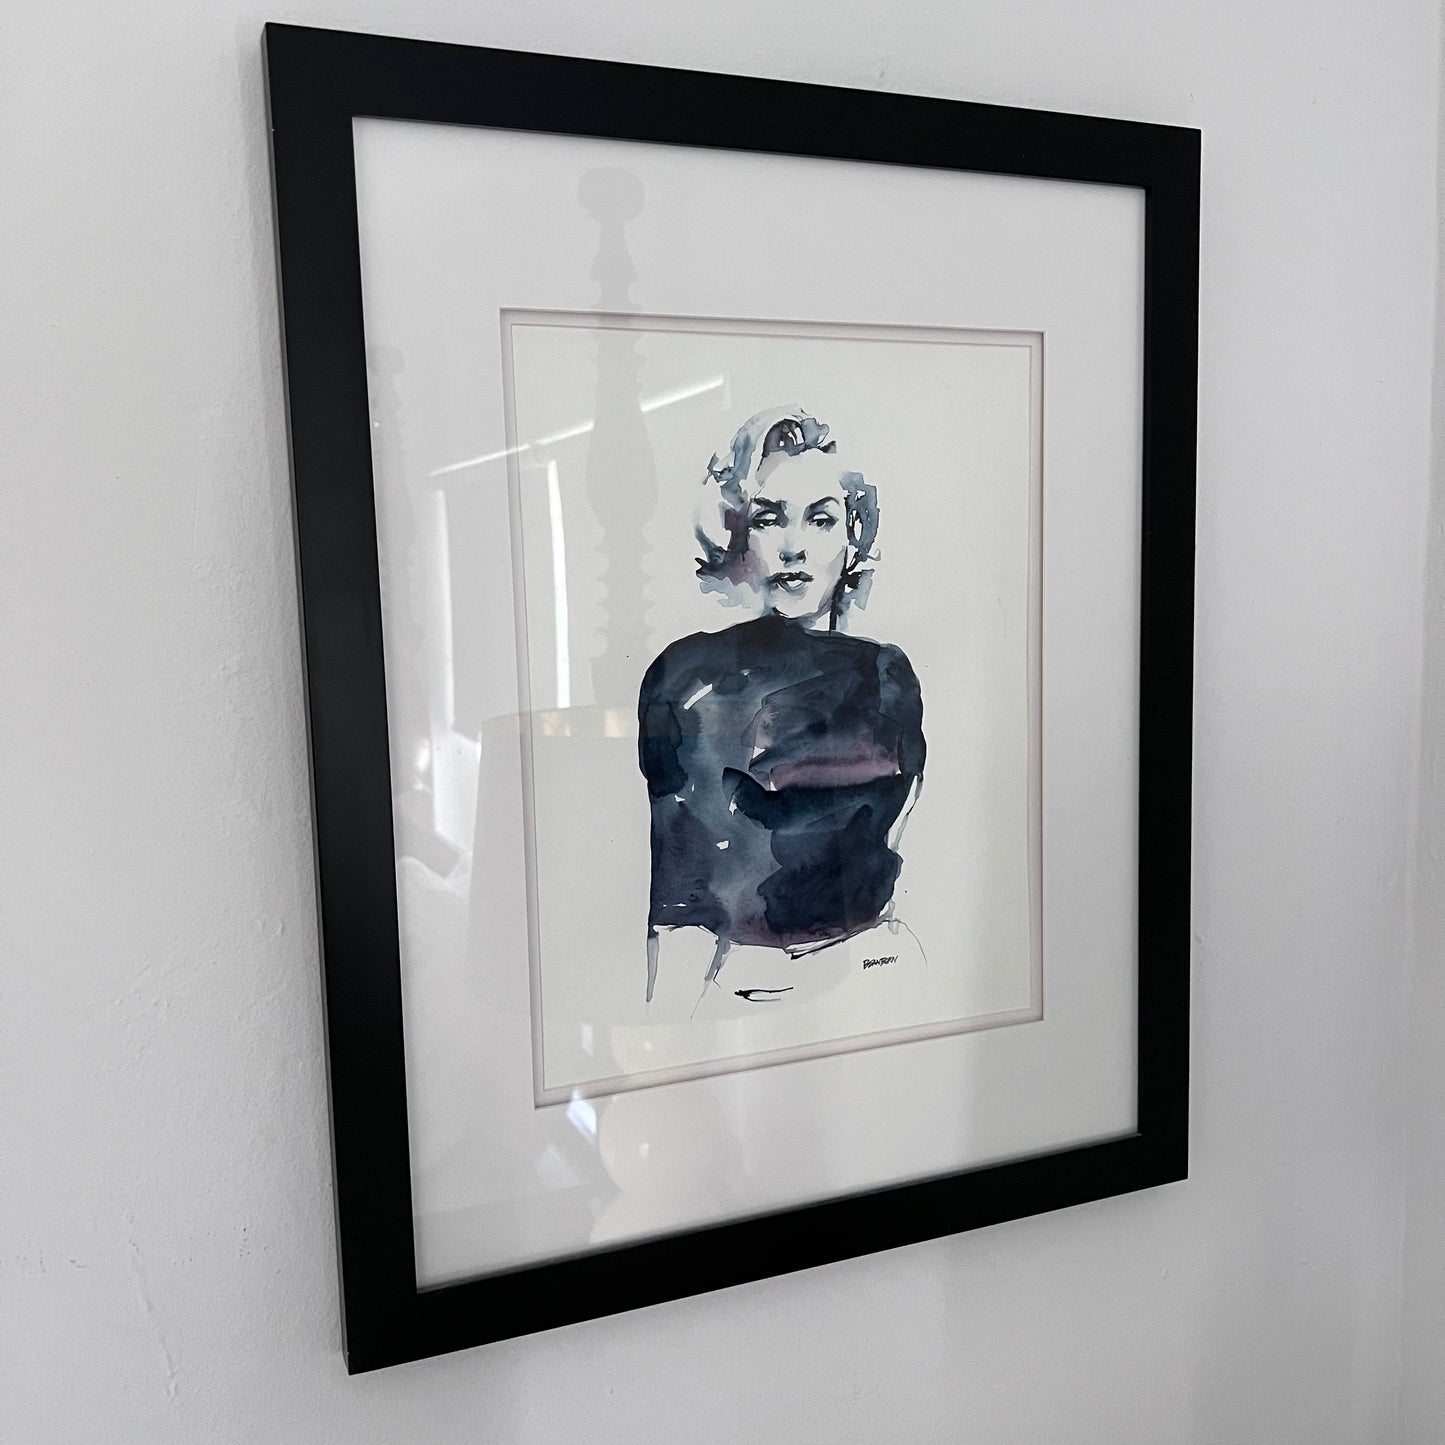 Capturing Marilyn Monroe: A Timeless Watercolor Portrait, 11x14 Original Watercolor